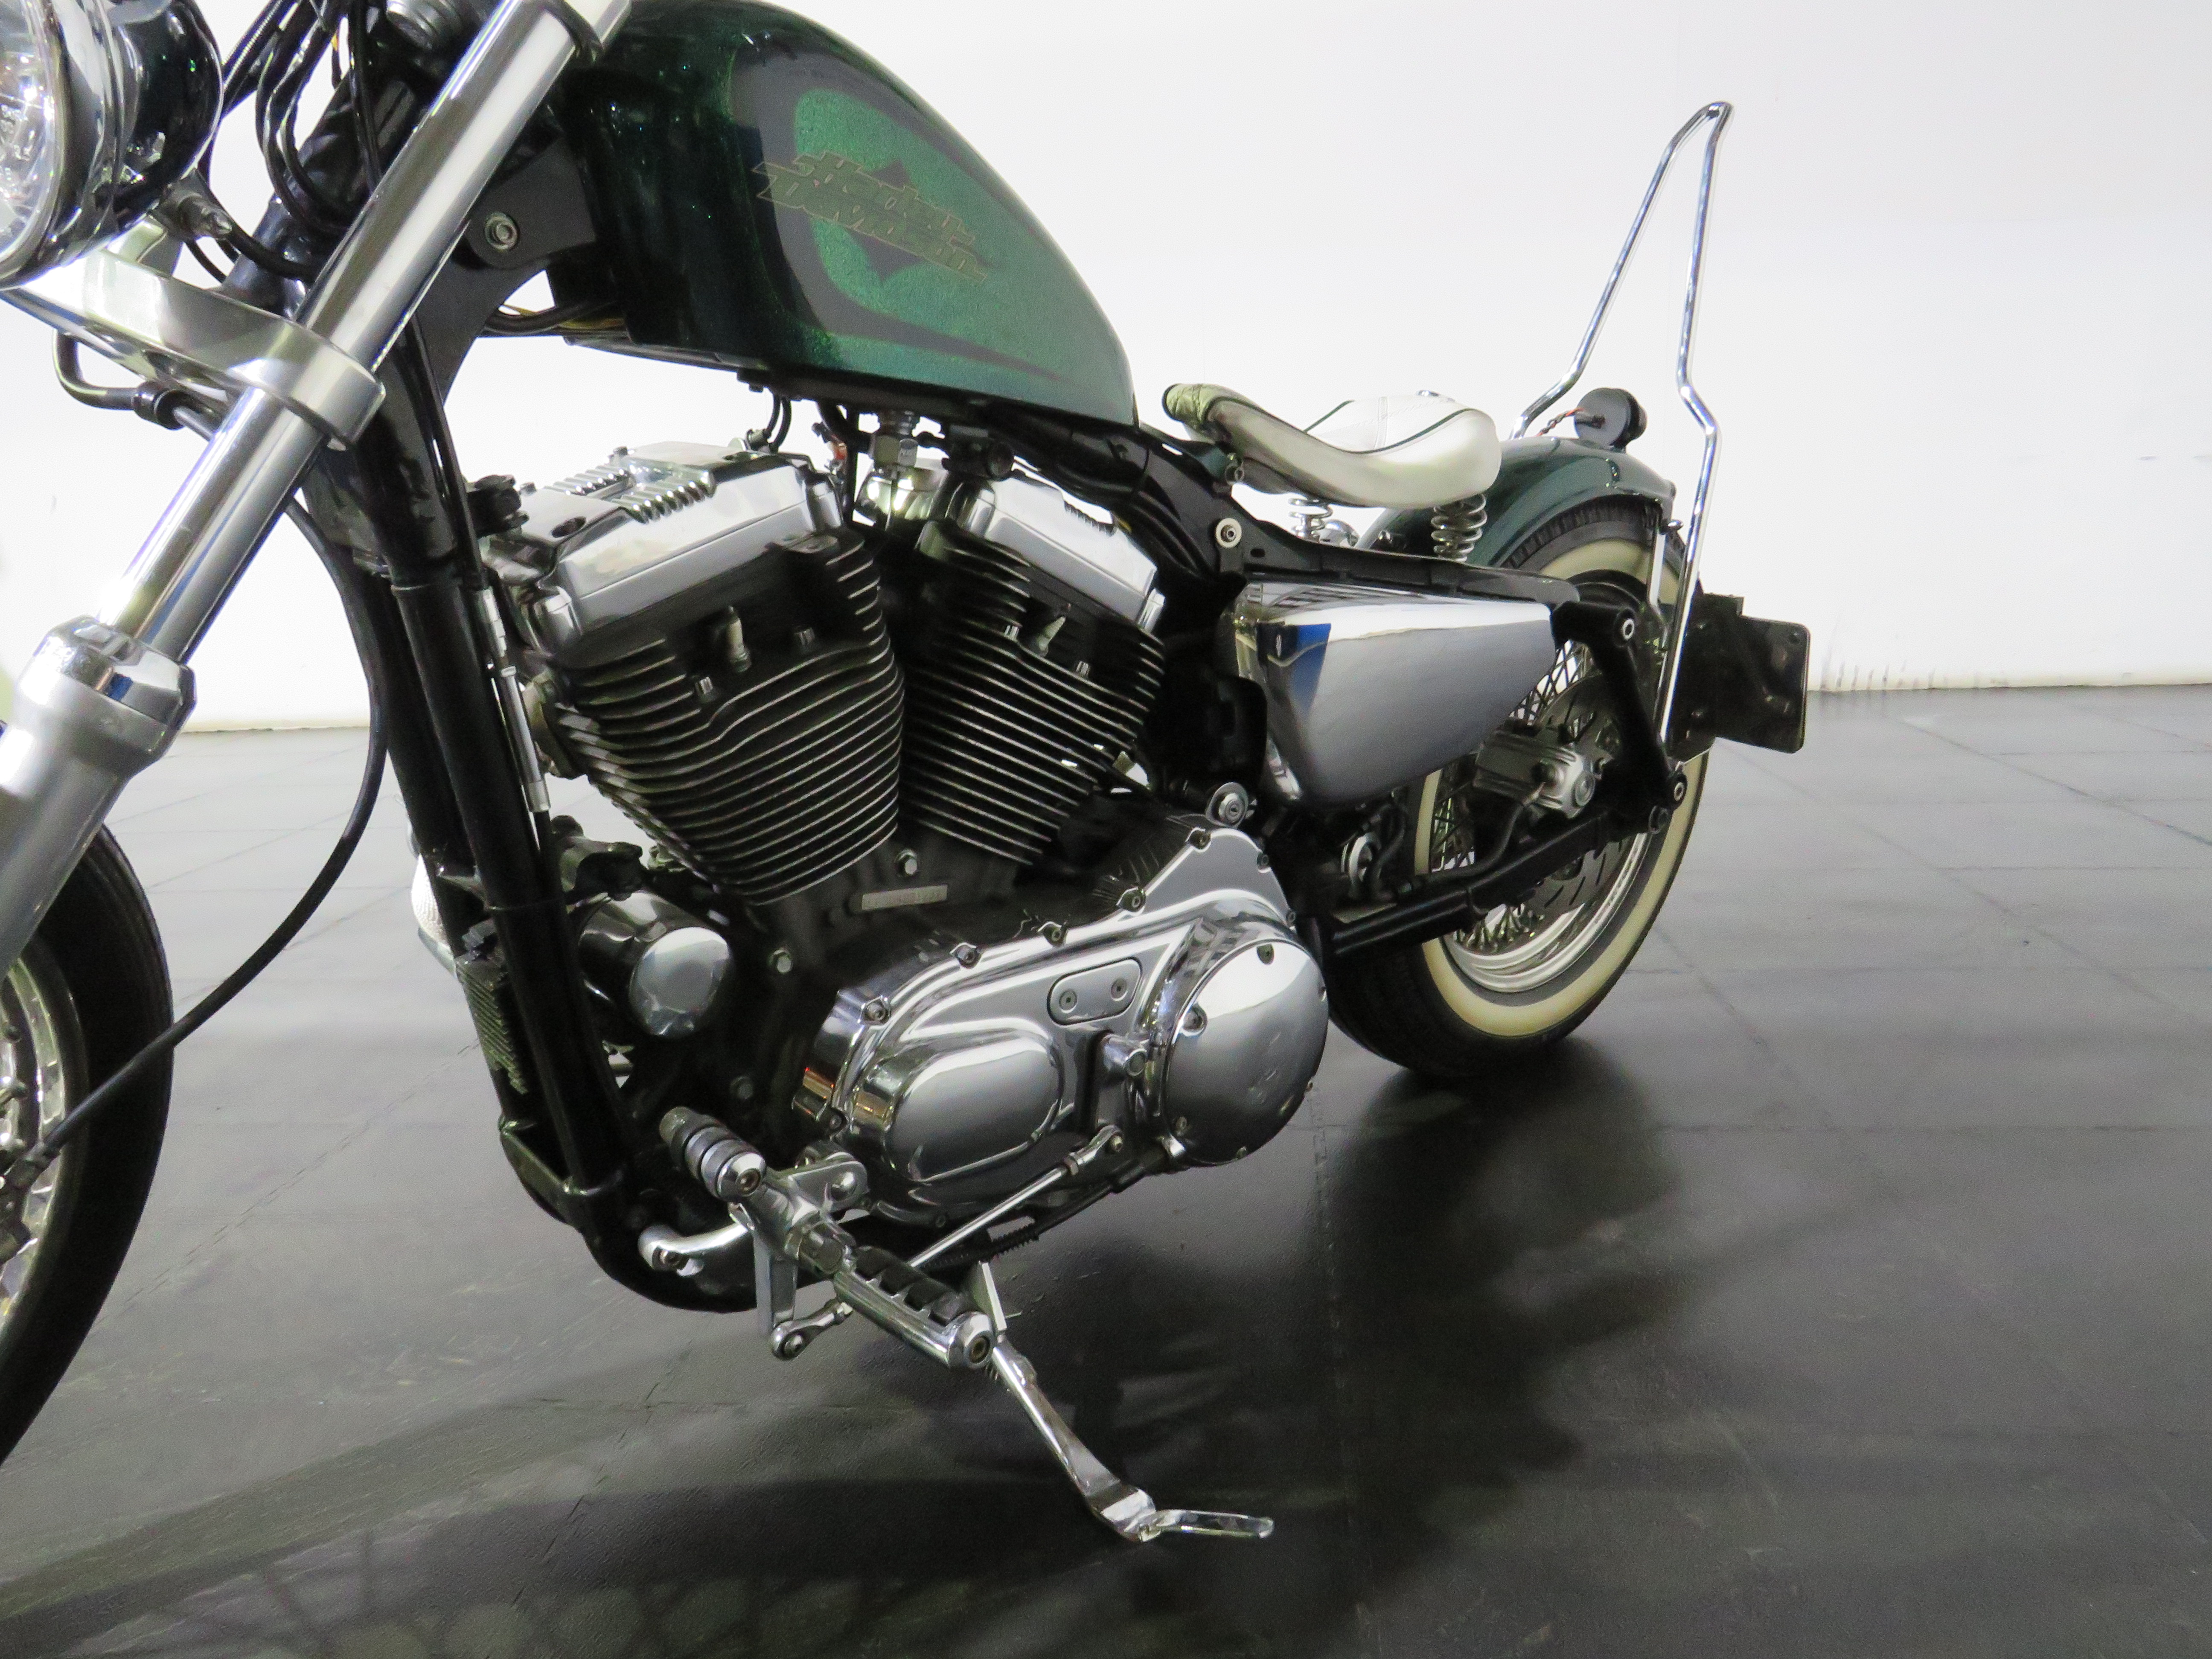 2013 Harley-Davidson Sportster 72 XL1200V - 1200cc - Image 10 of 15